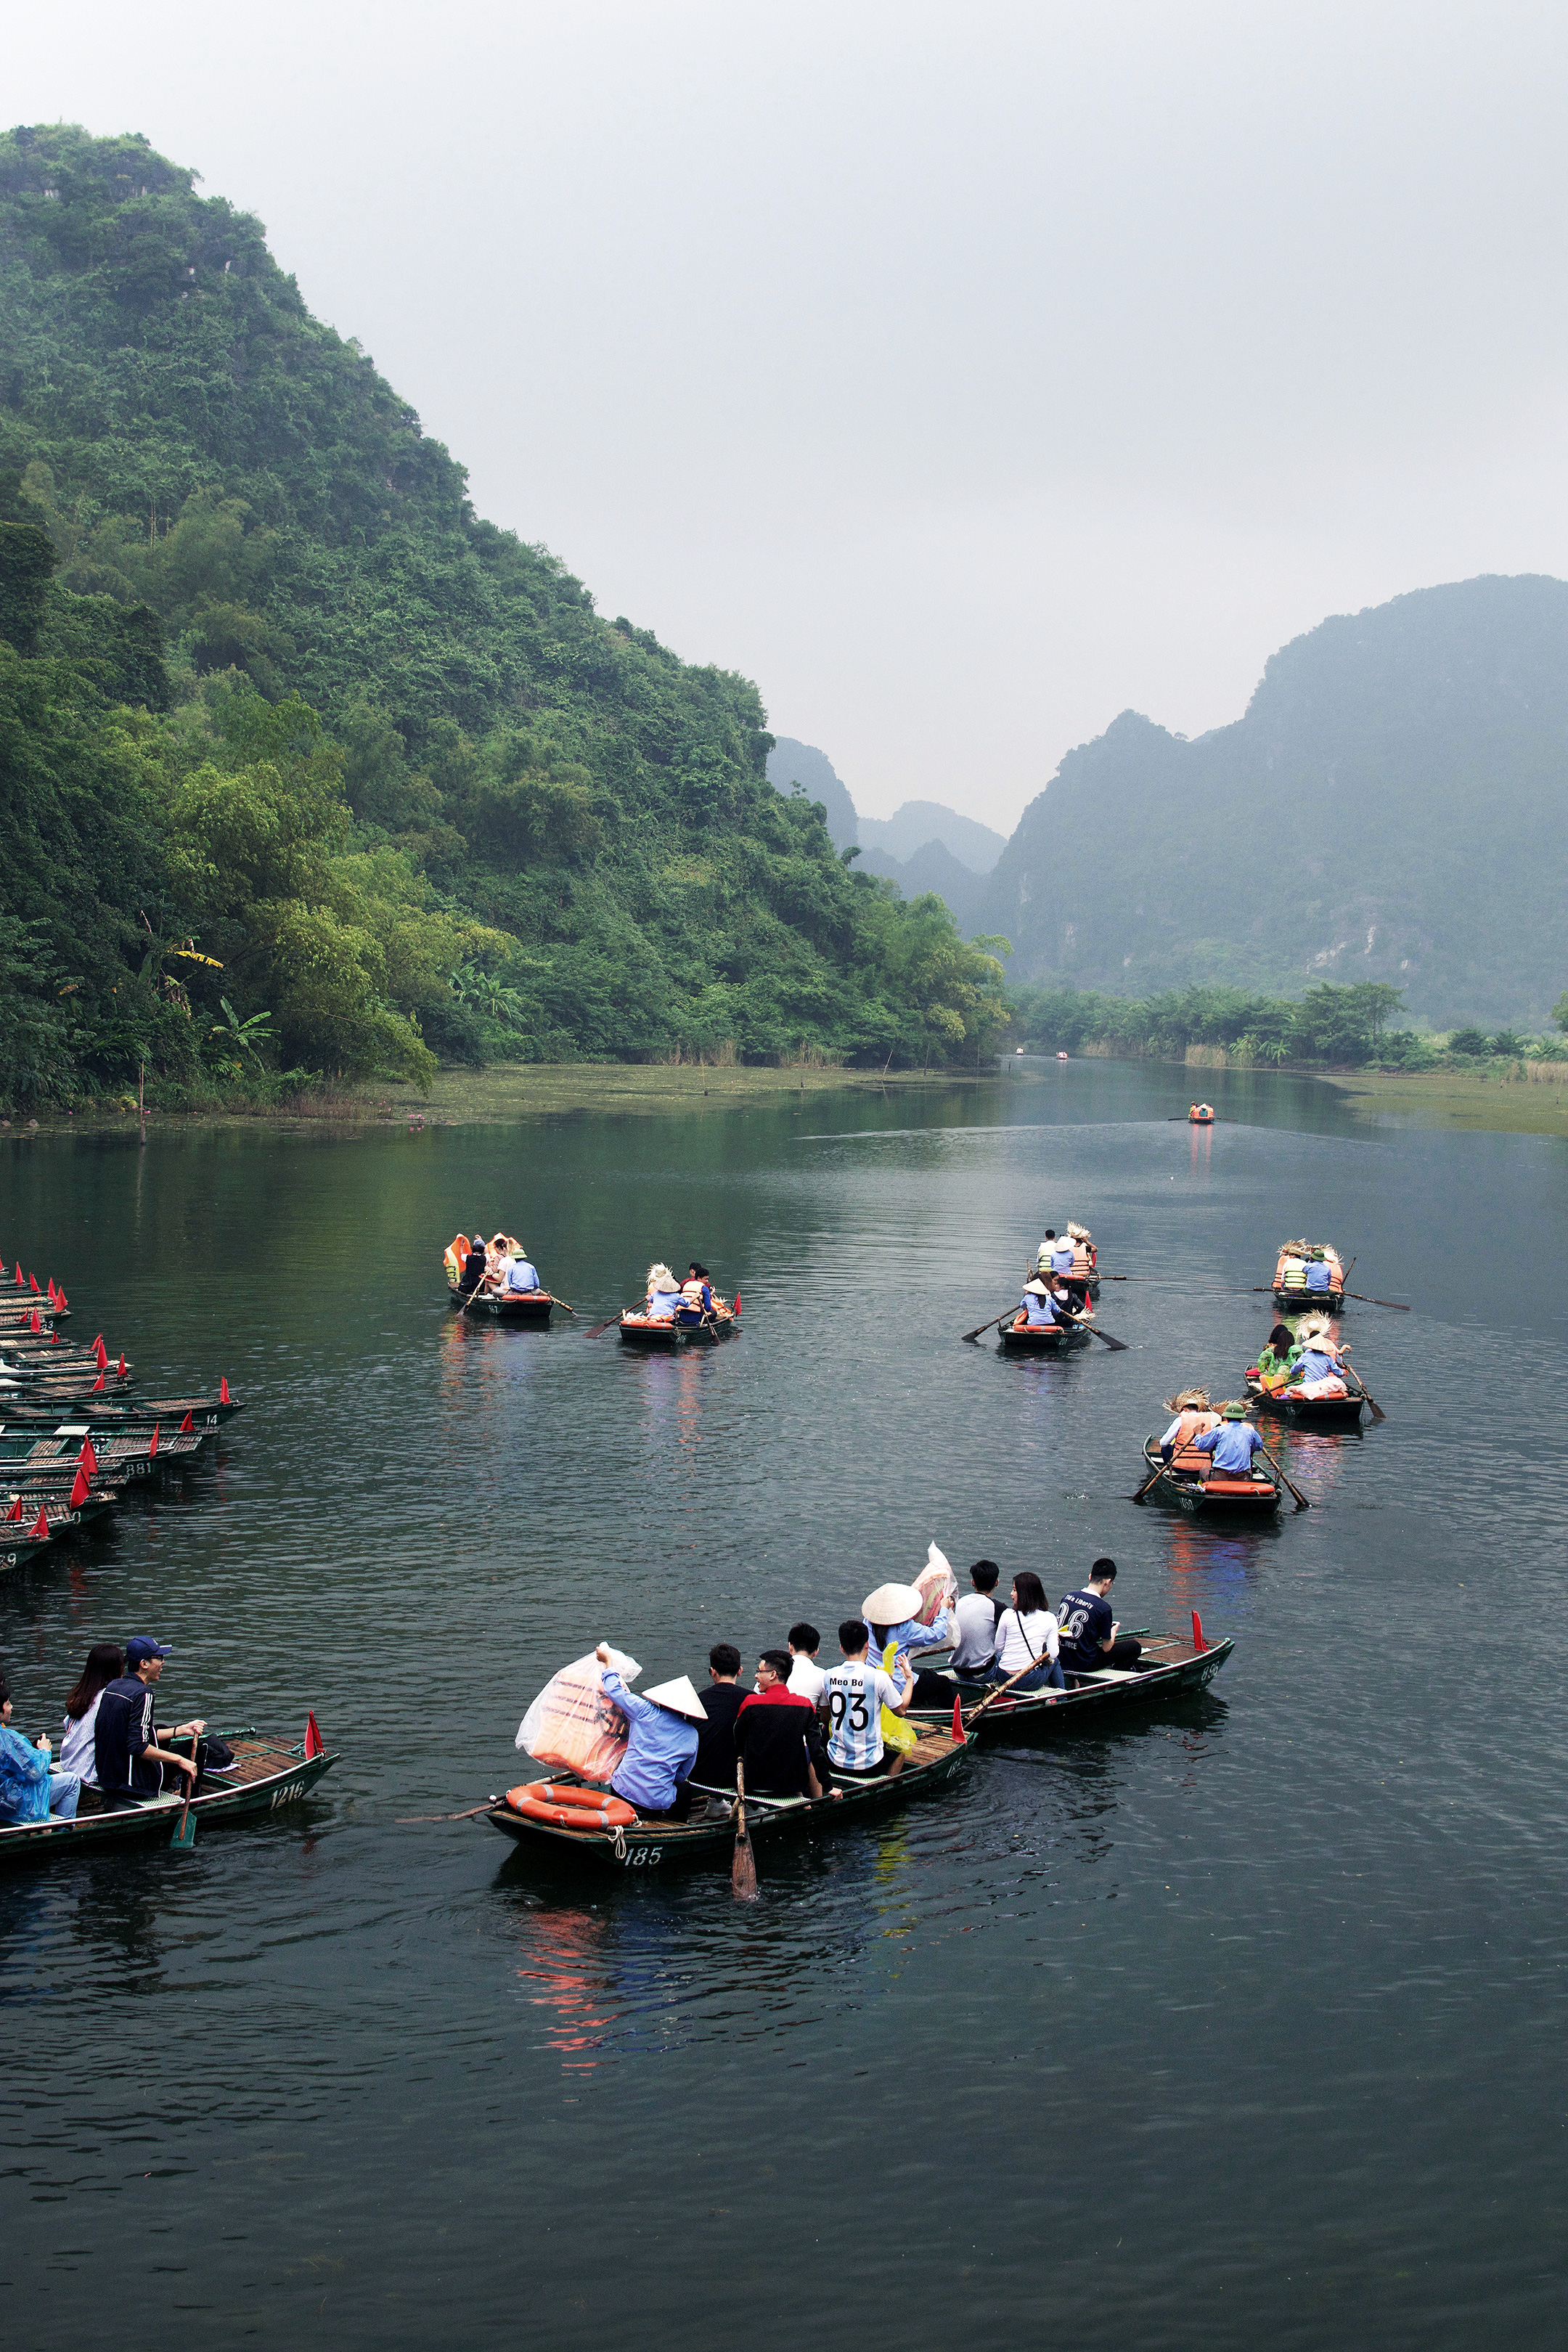 Ultimate 1 Week Travel Guide To Northern Vietnam — Annchovie